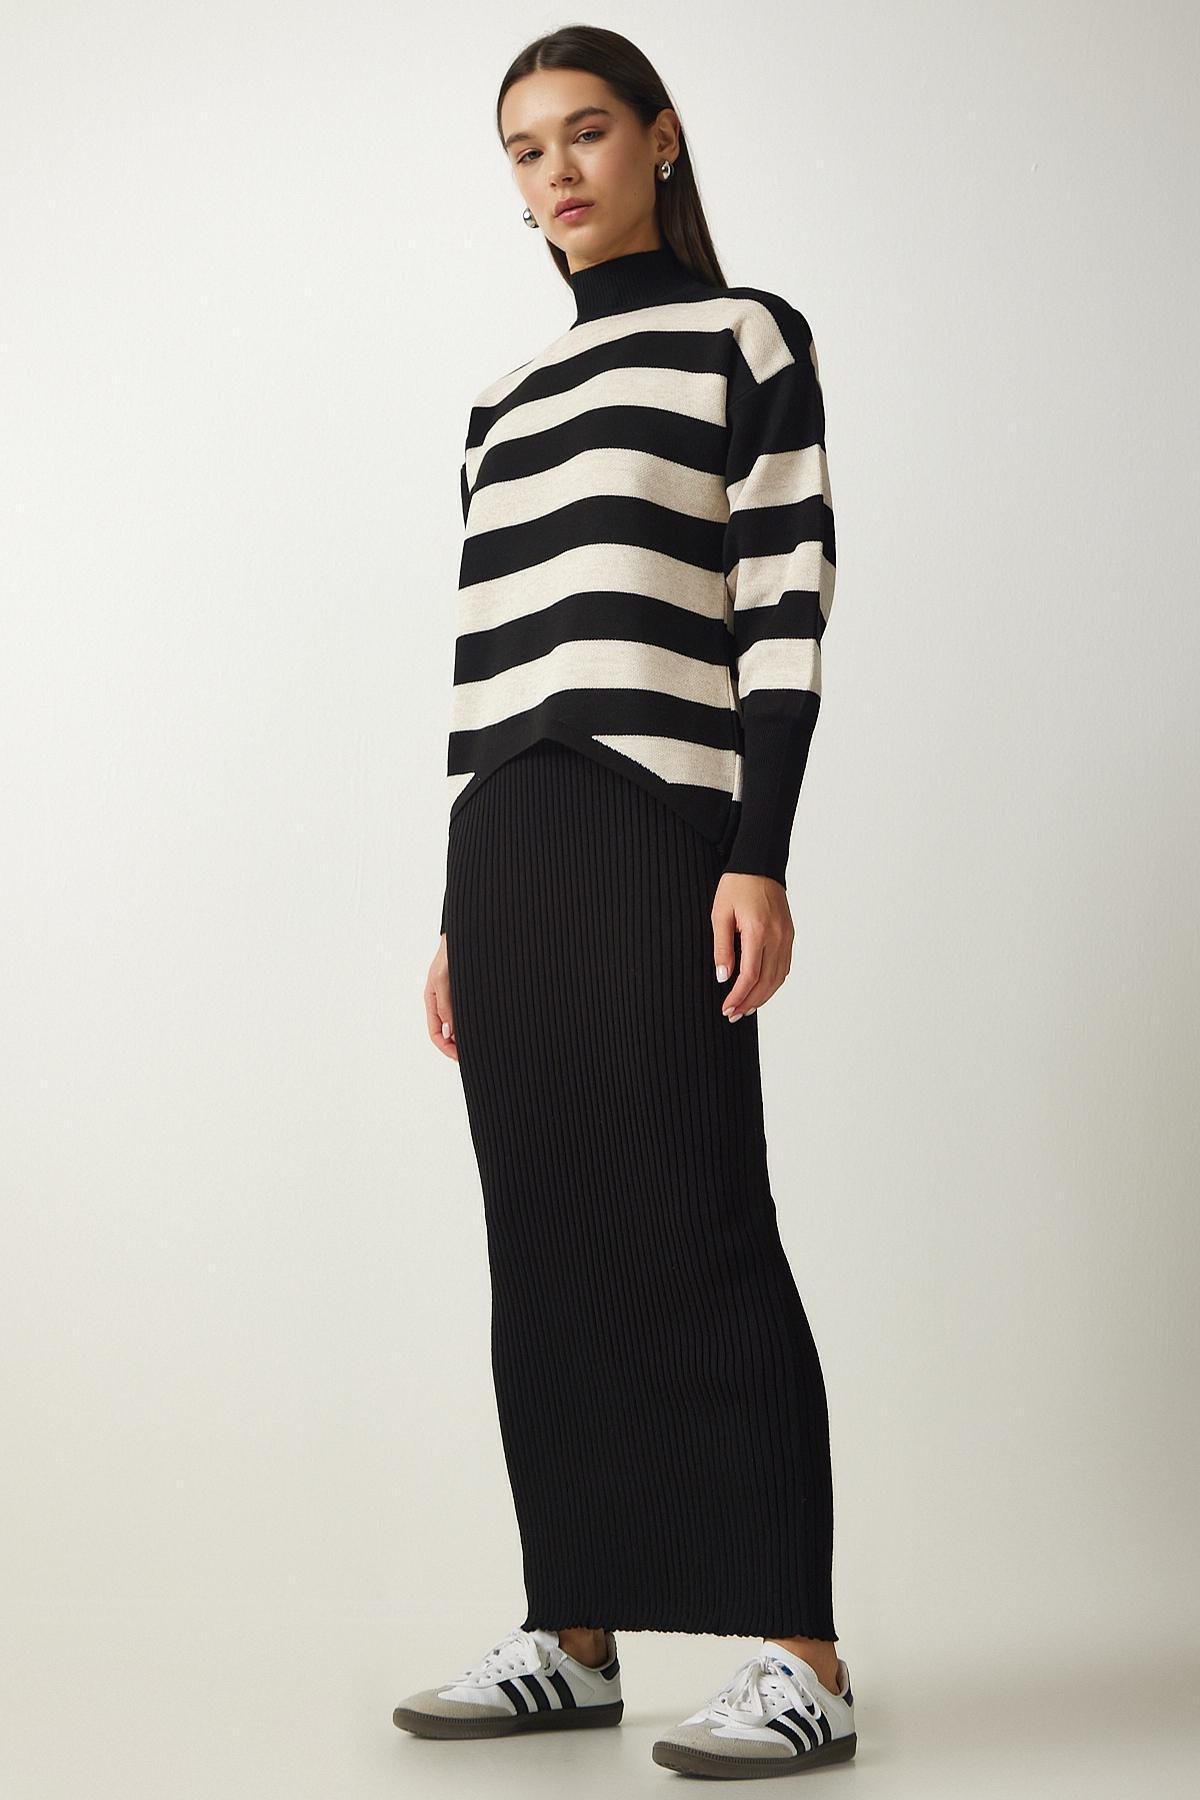 Happiness Istanbul - Womens Black Striped Sweater Dress Knitwear Suit KG00008, 2 x